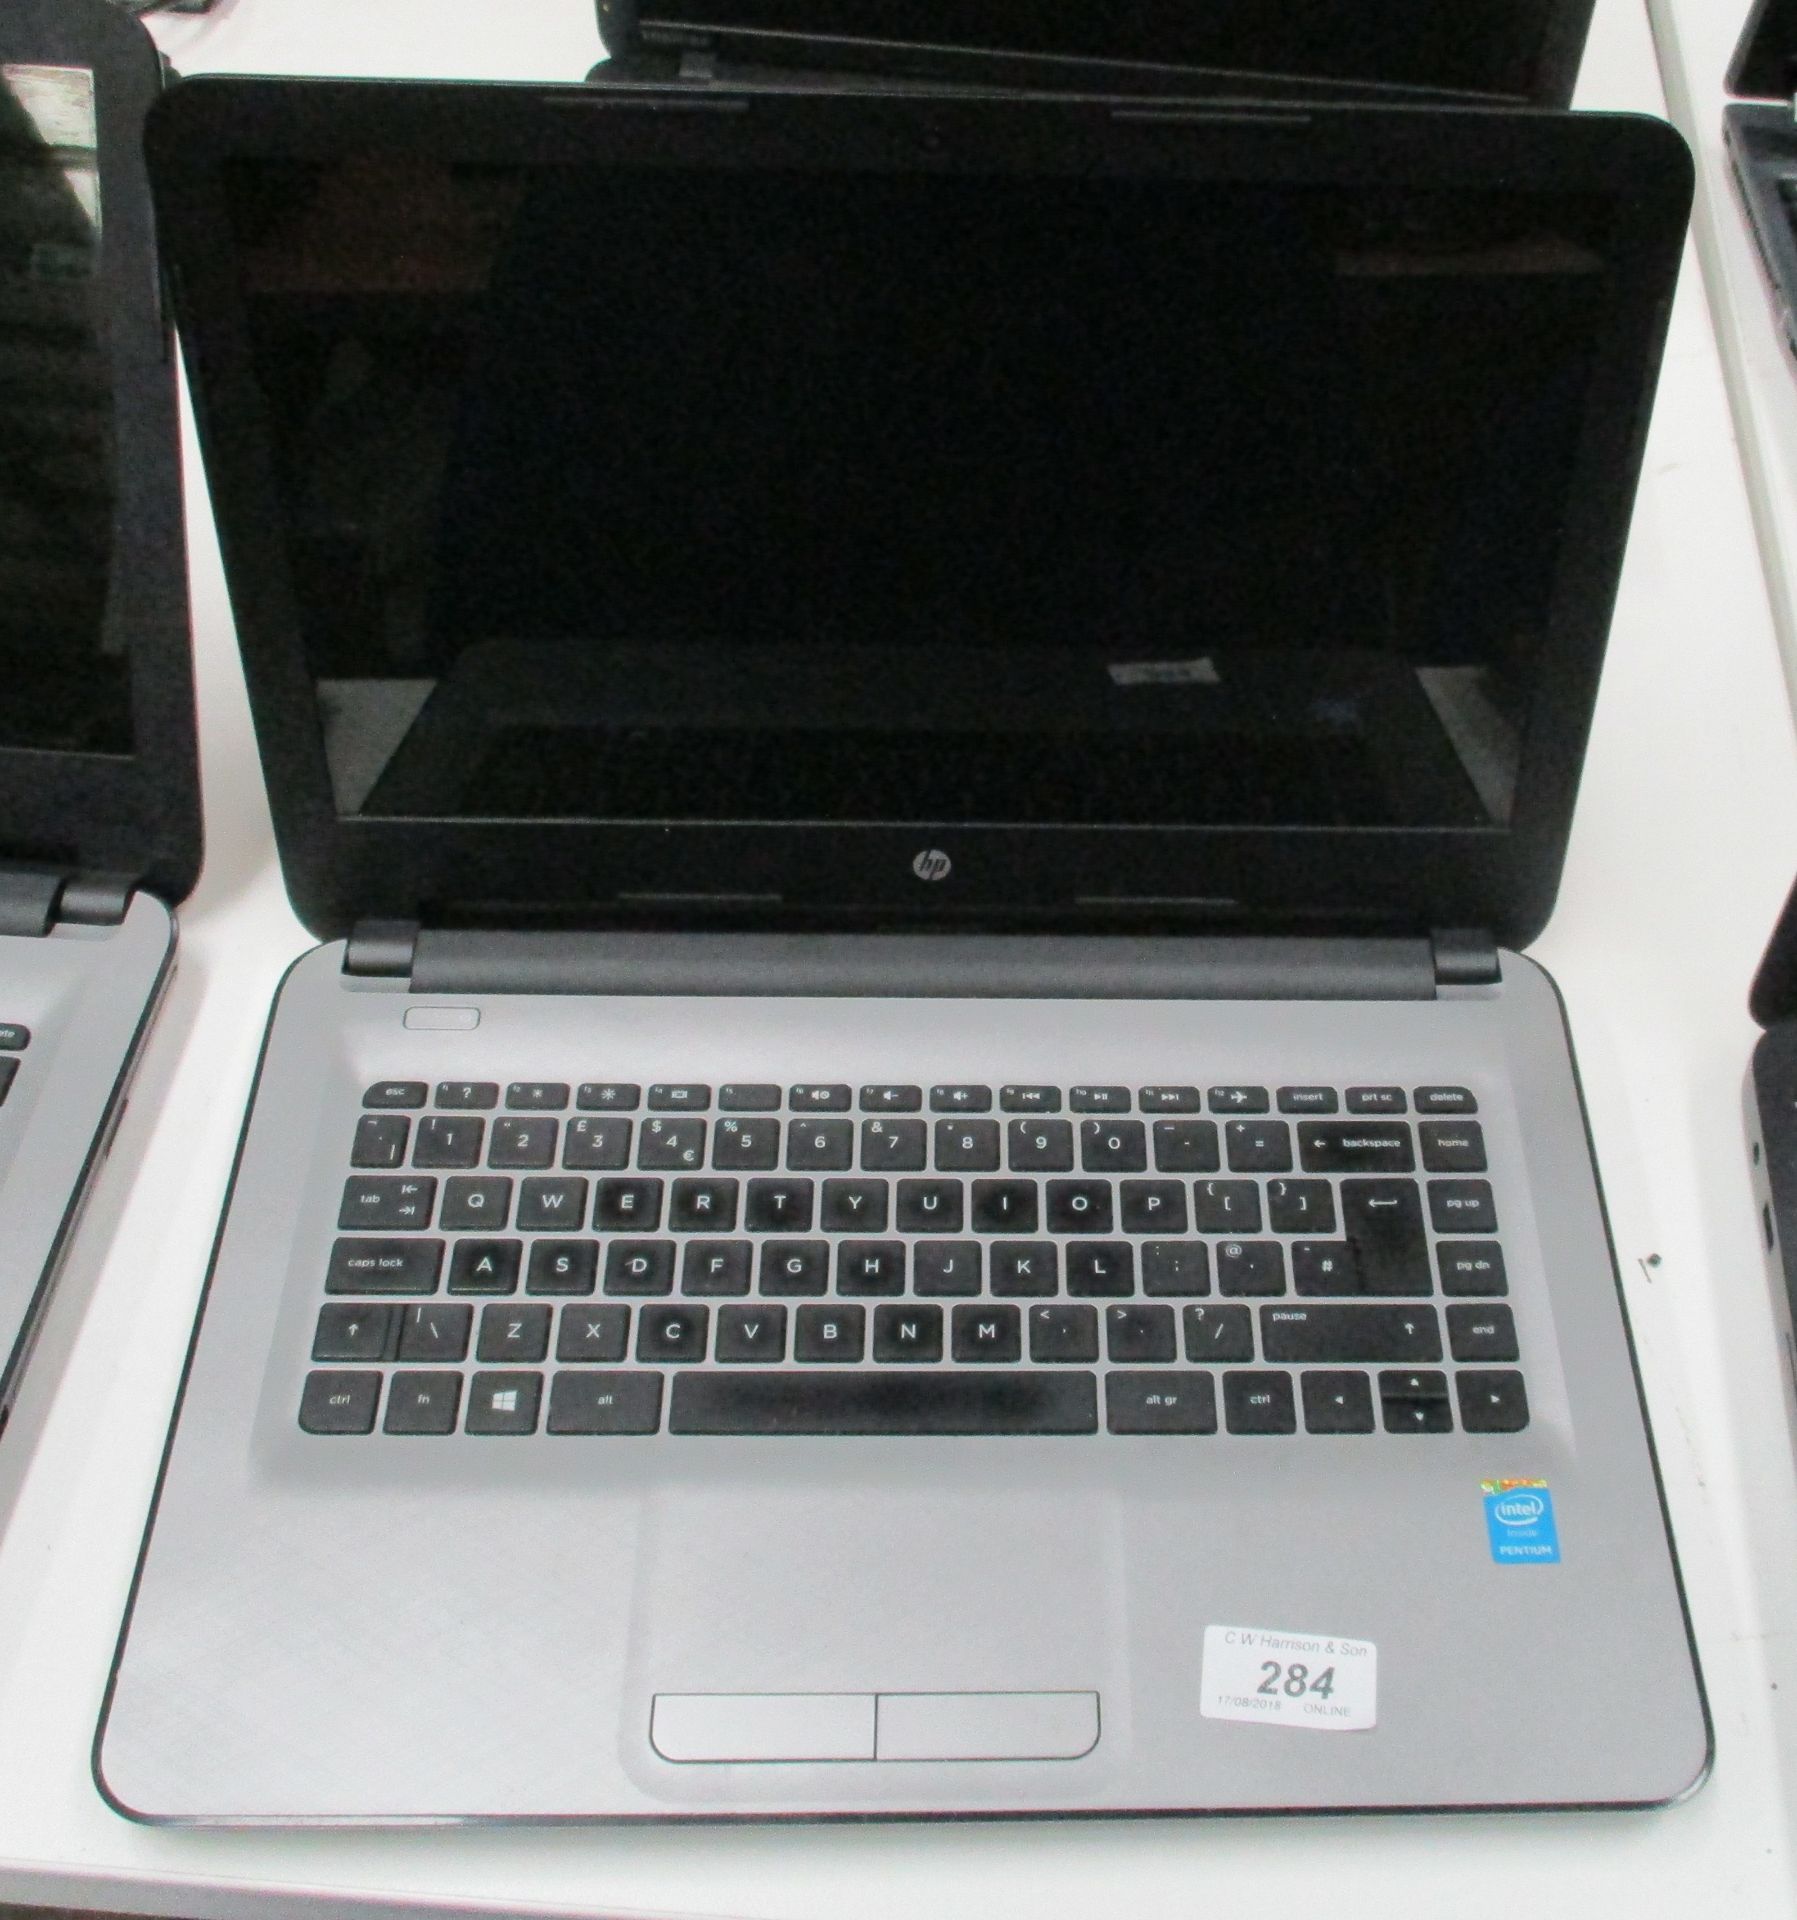 An HP laptop computer - no power lead